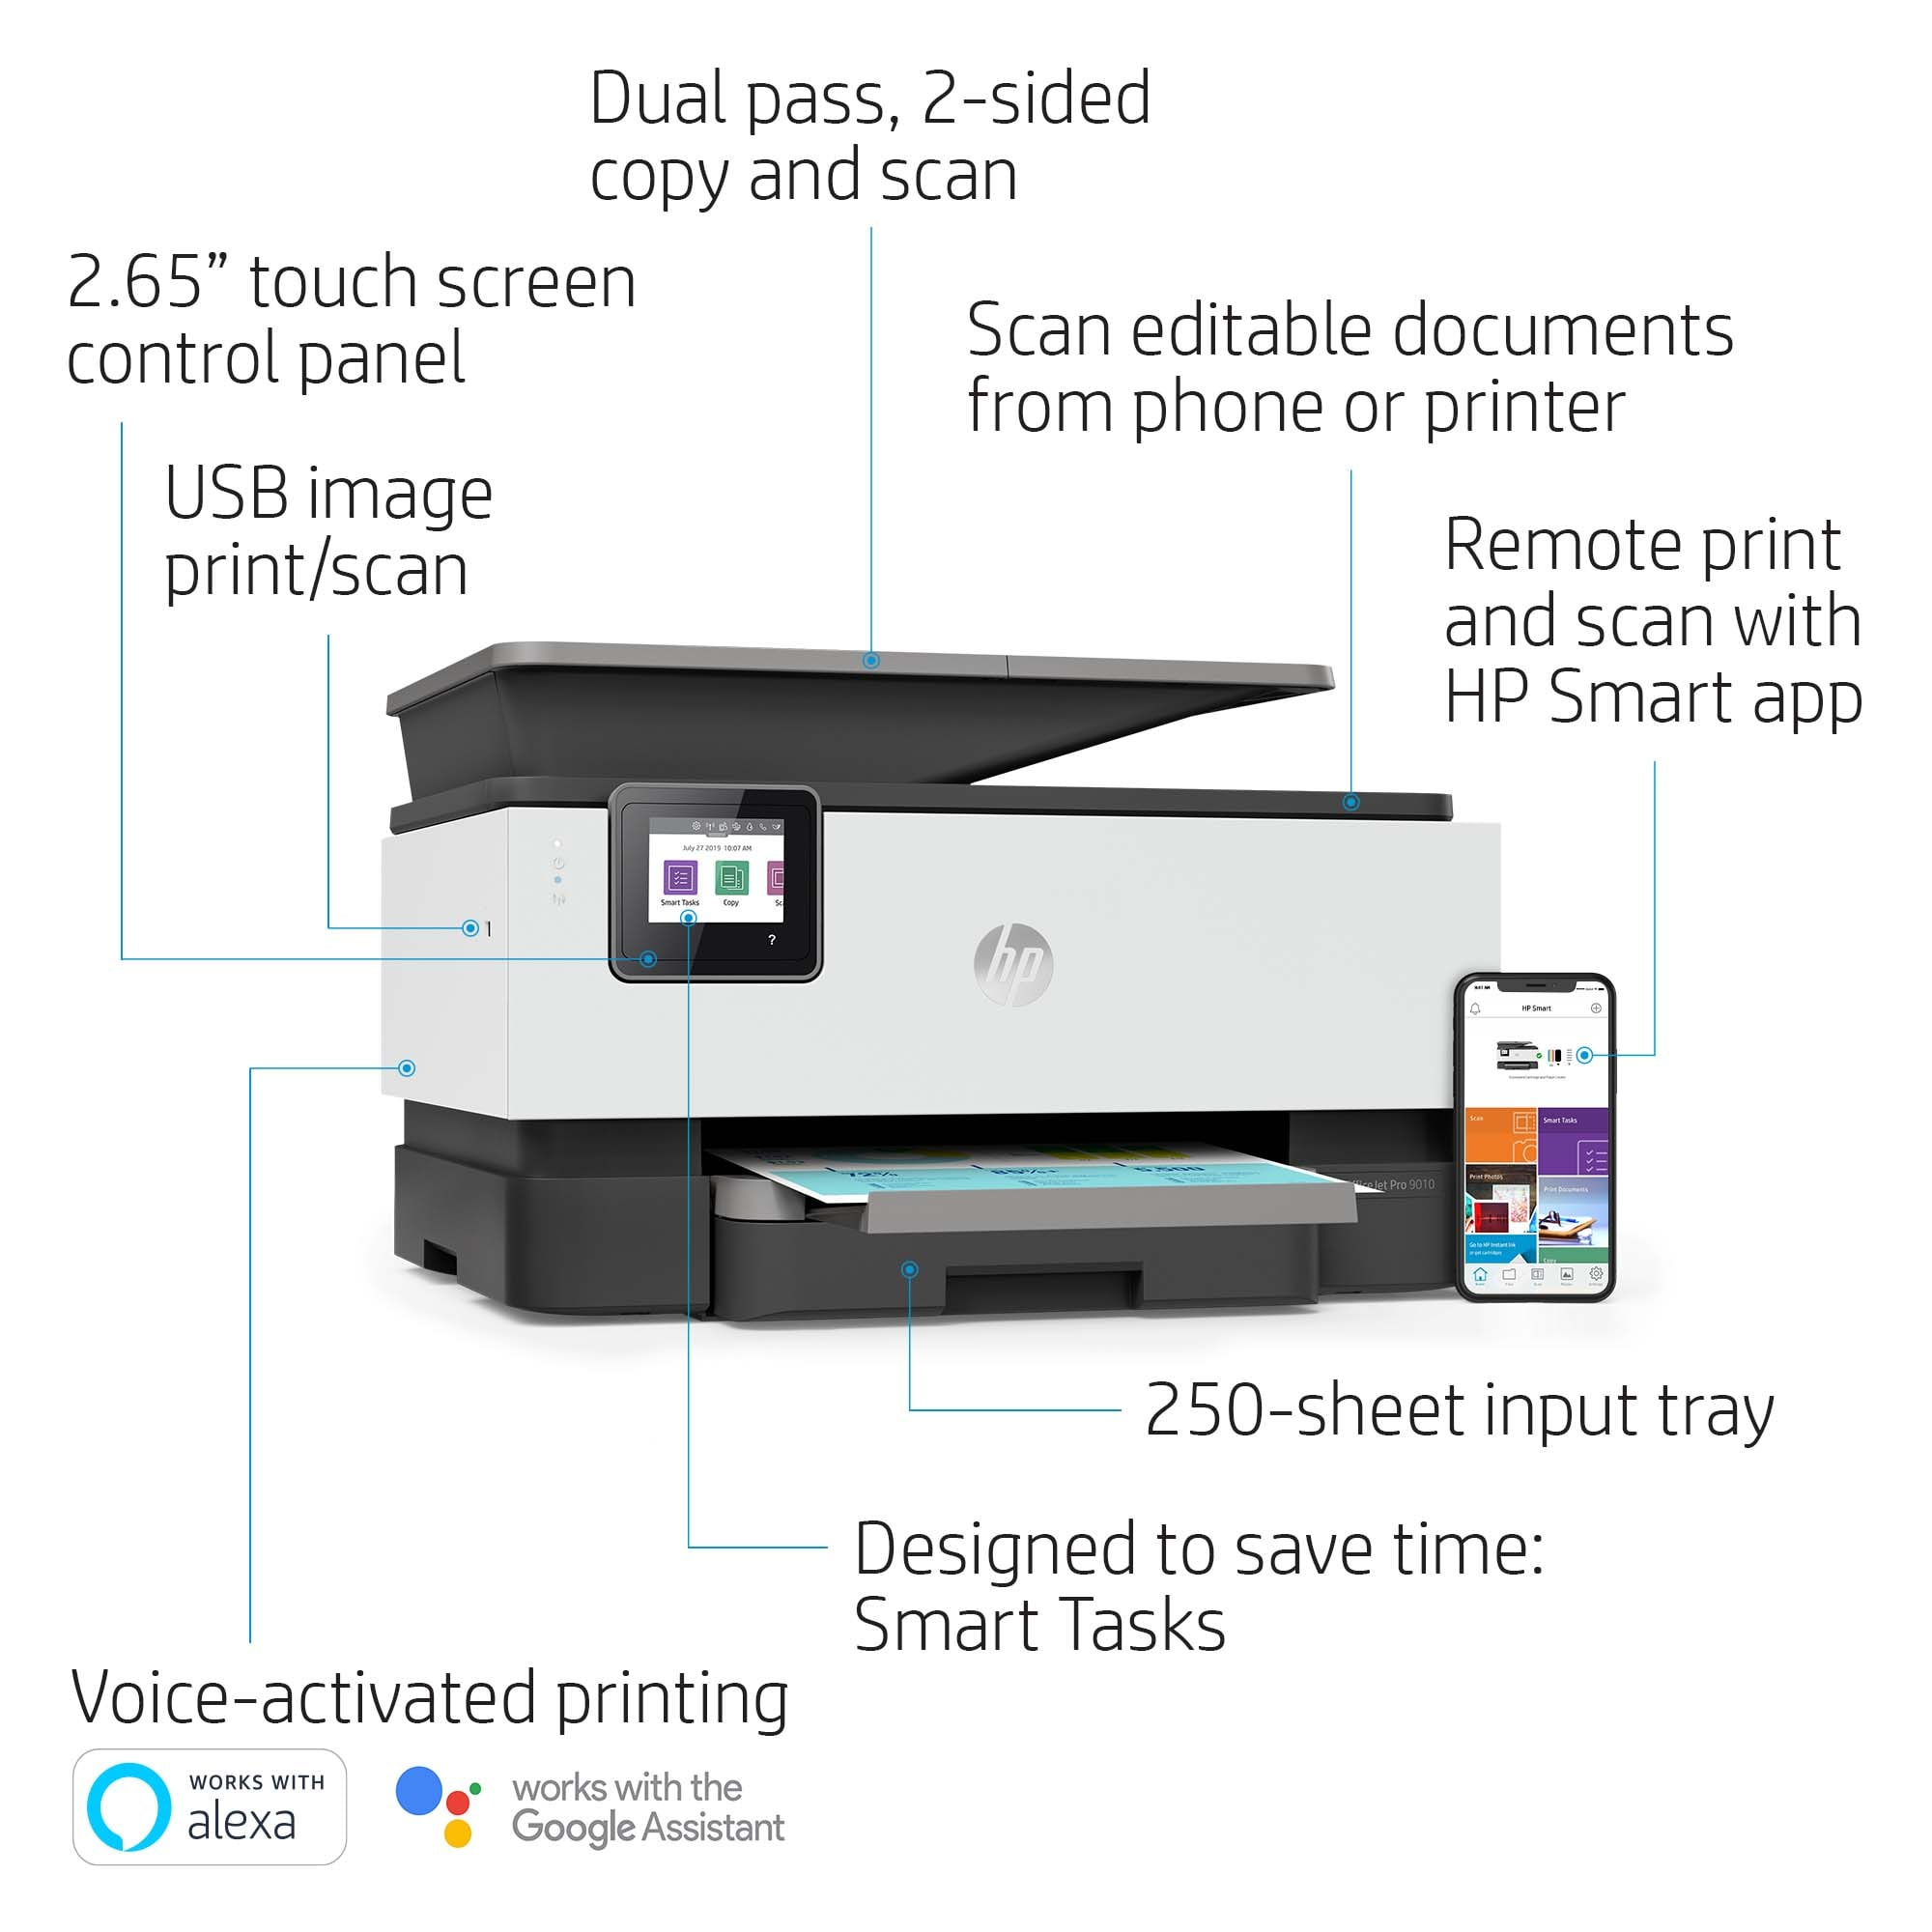 HP Officejet Pro 9010 Colour Ink-Jet Multifunction Printer (3UK83B